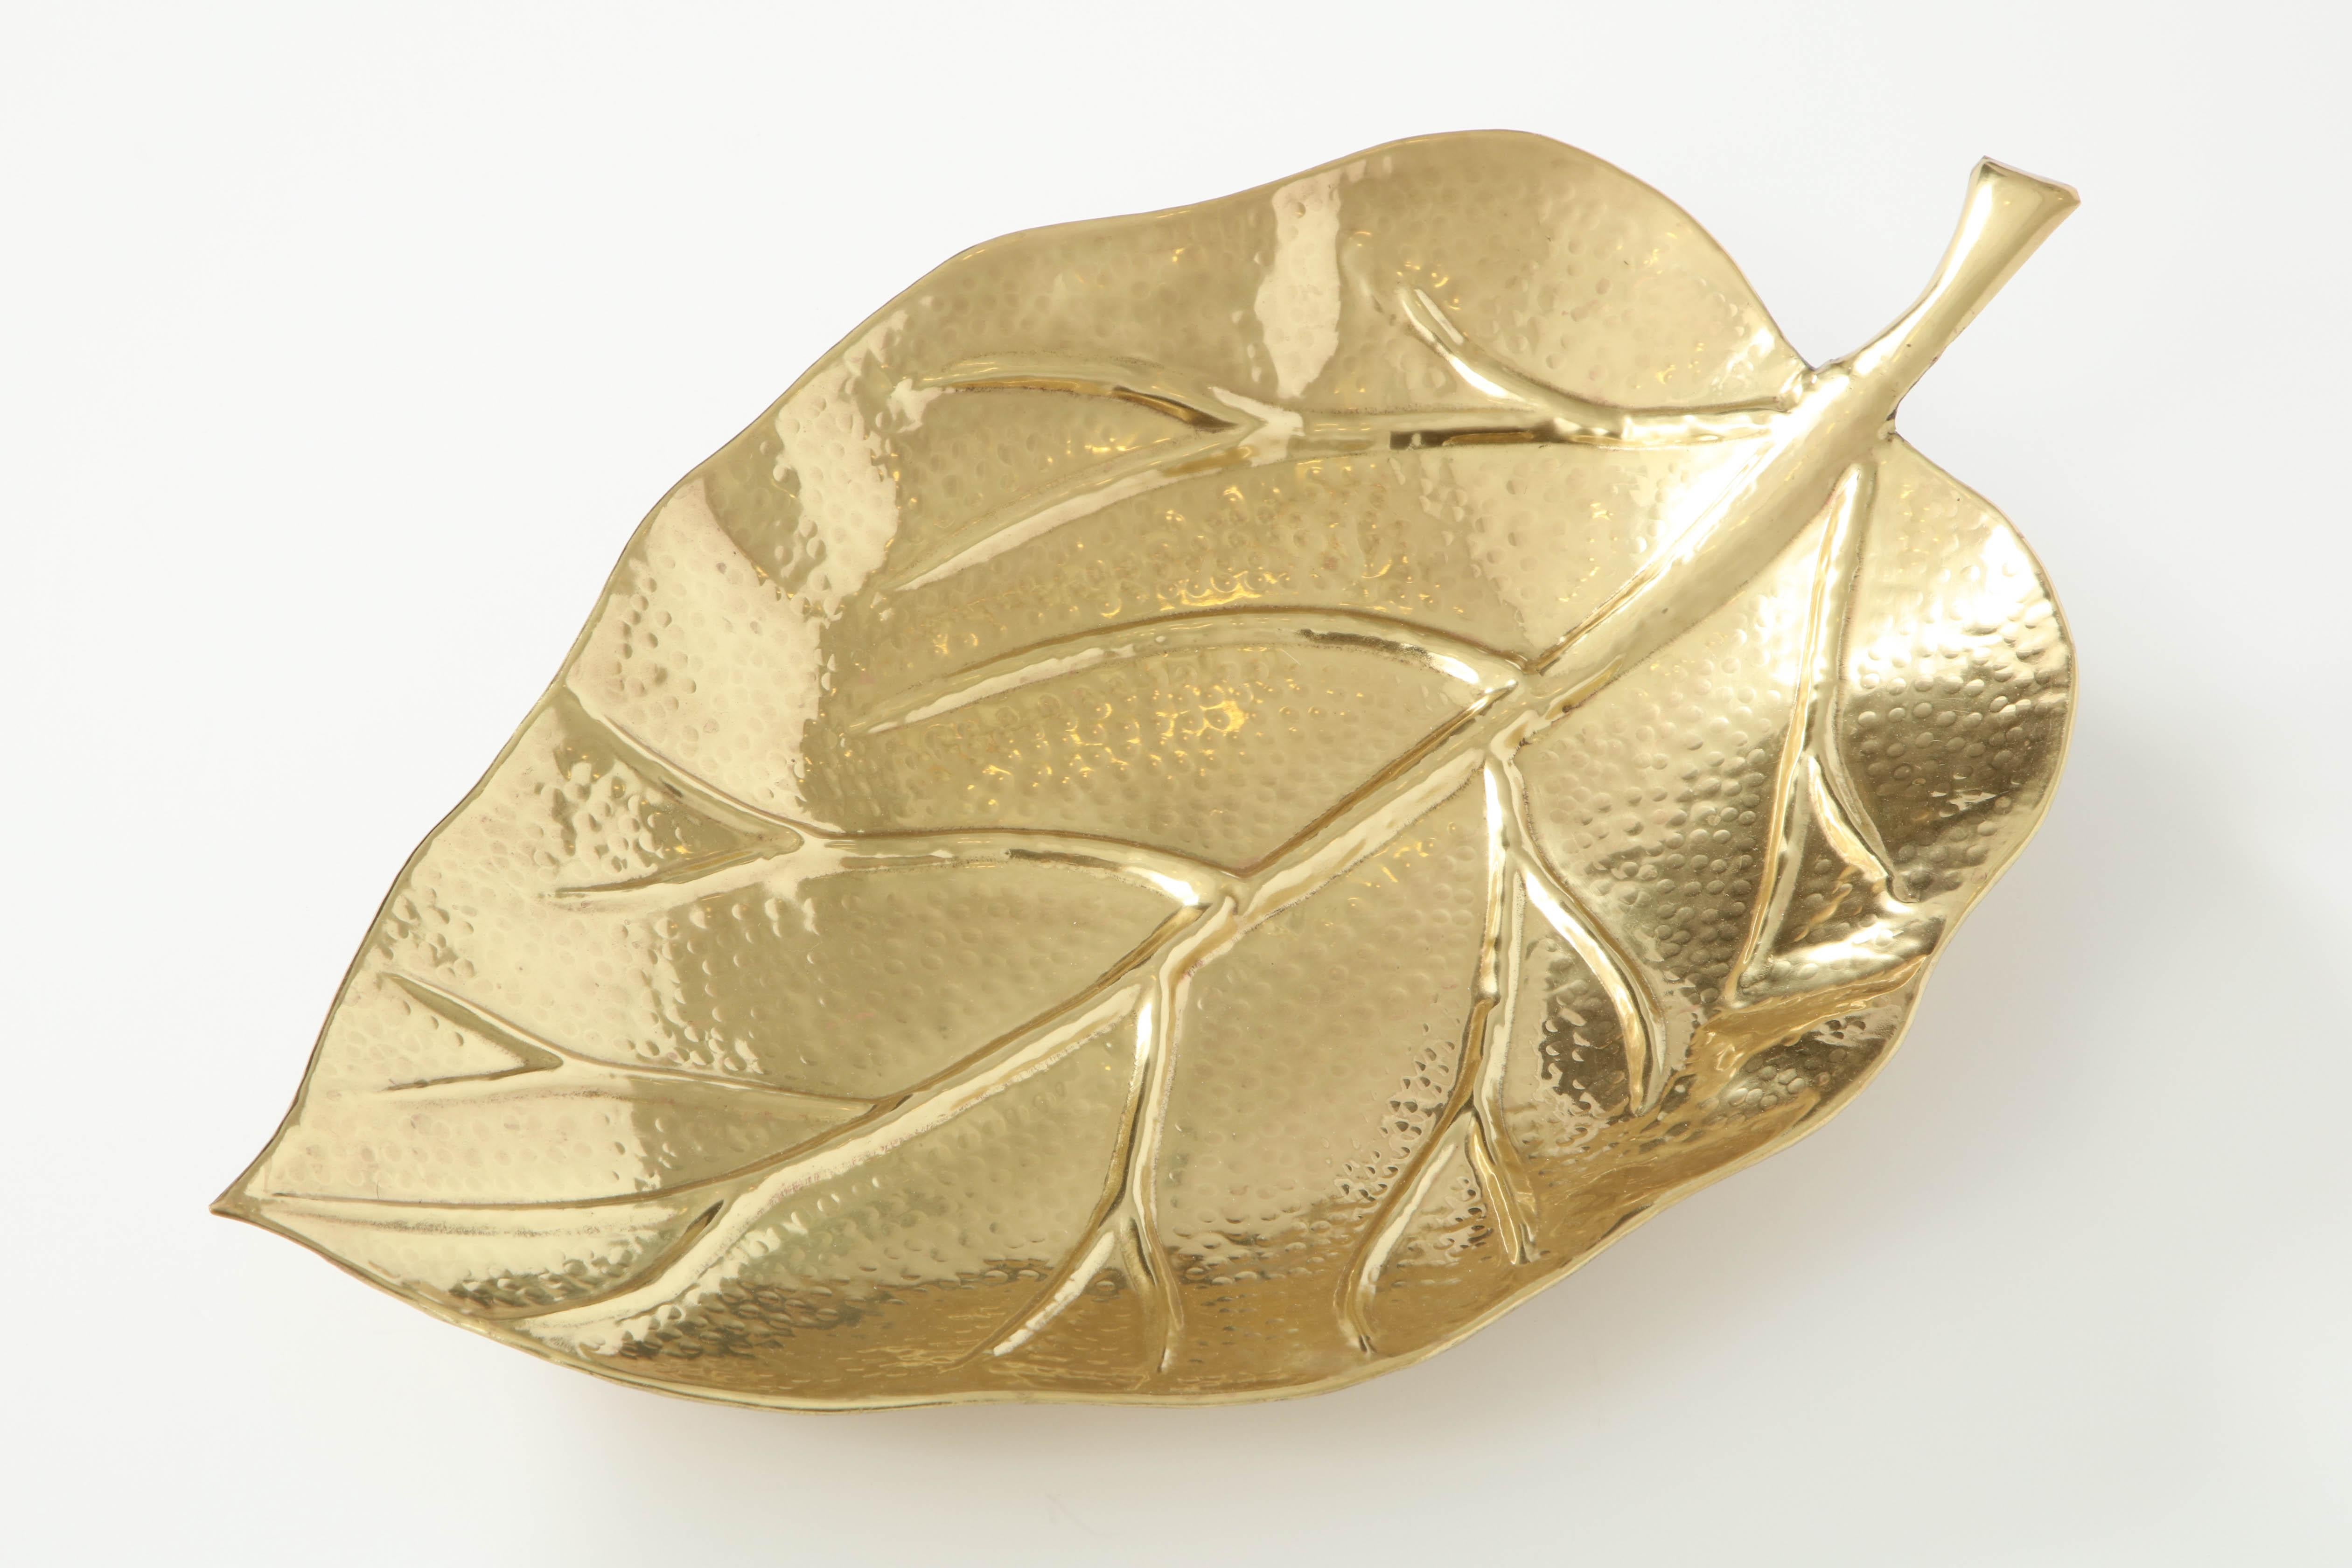 Hand-Crafted Bowl, Leaf Shape, Midcentury Italian, Brass, circa 1950, Polished Brass